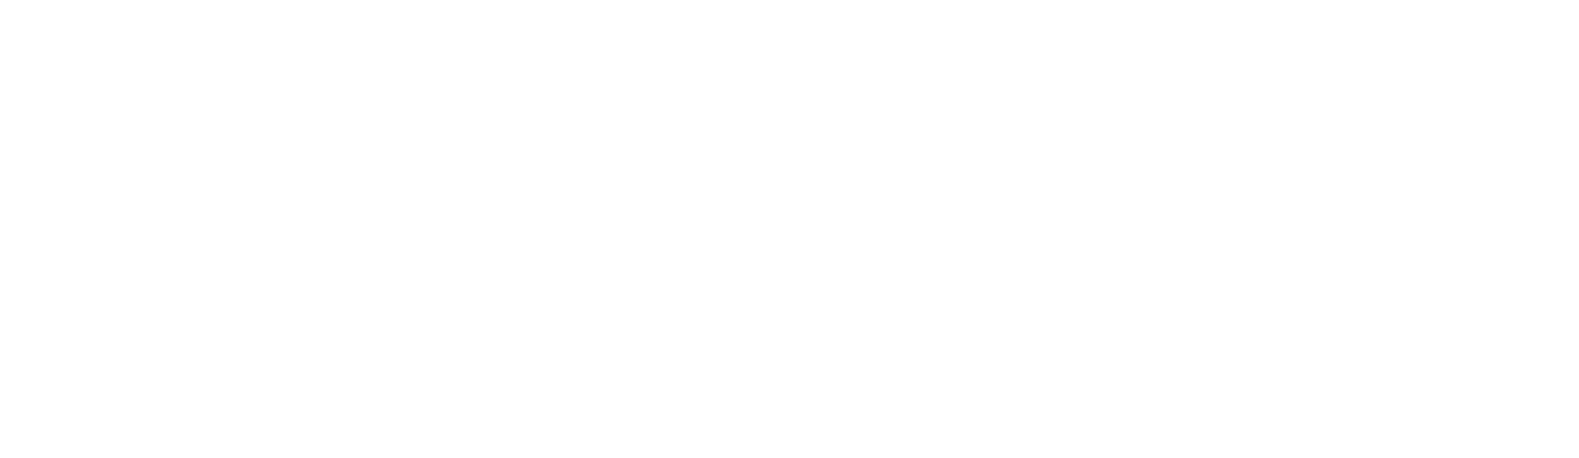 Hess Midstream Logo groß für dunkle Hintergründe (transparentes PNG)